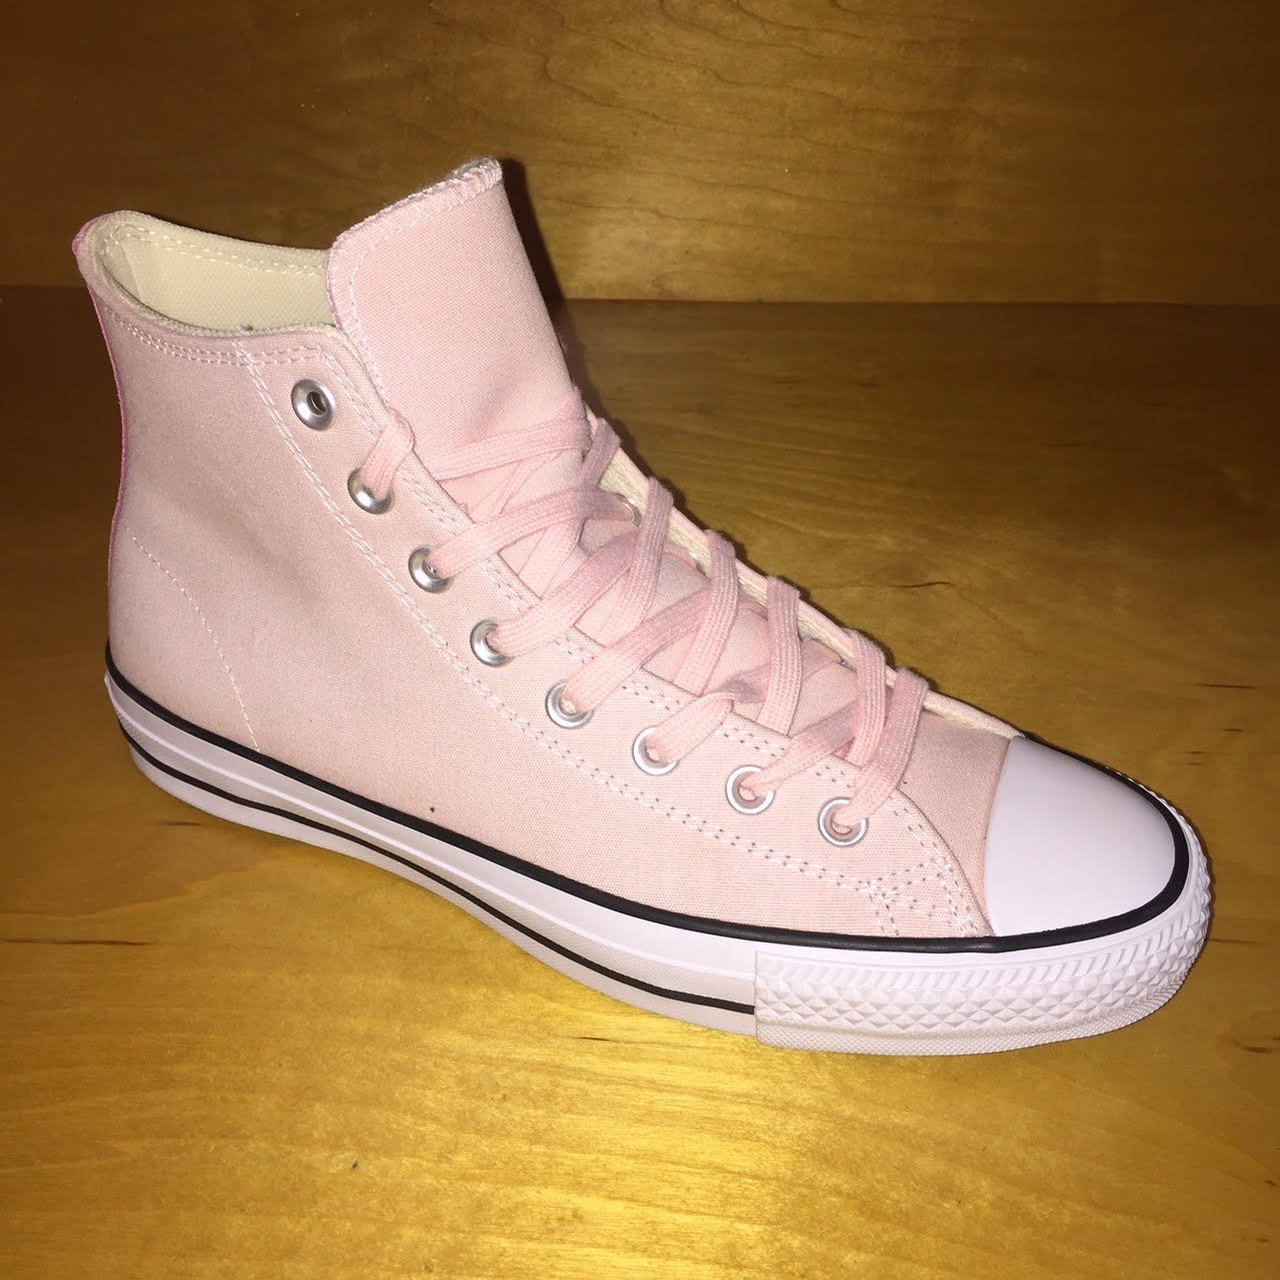 vapor pink converse